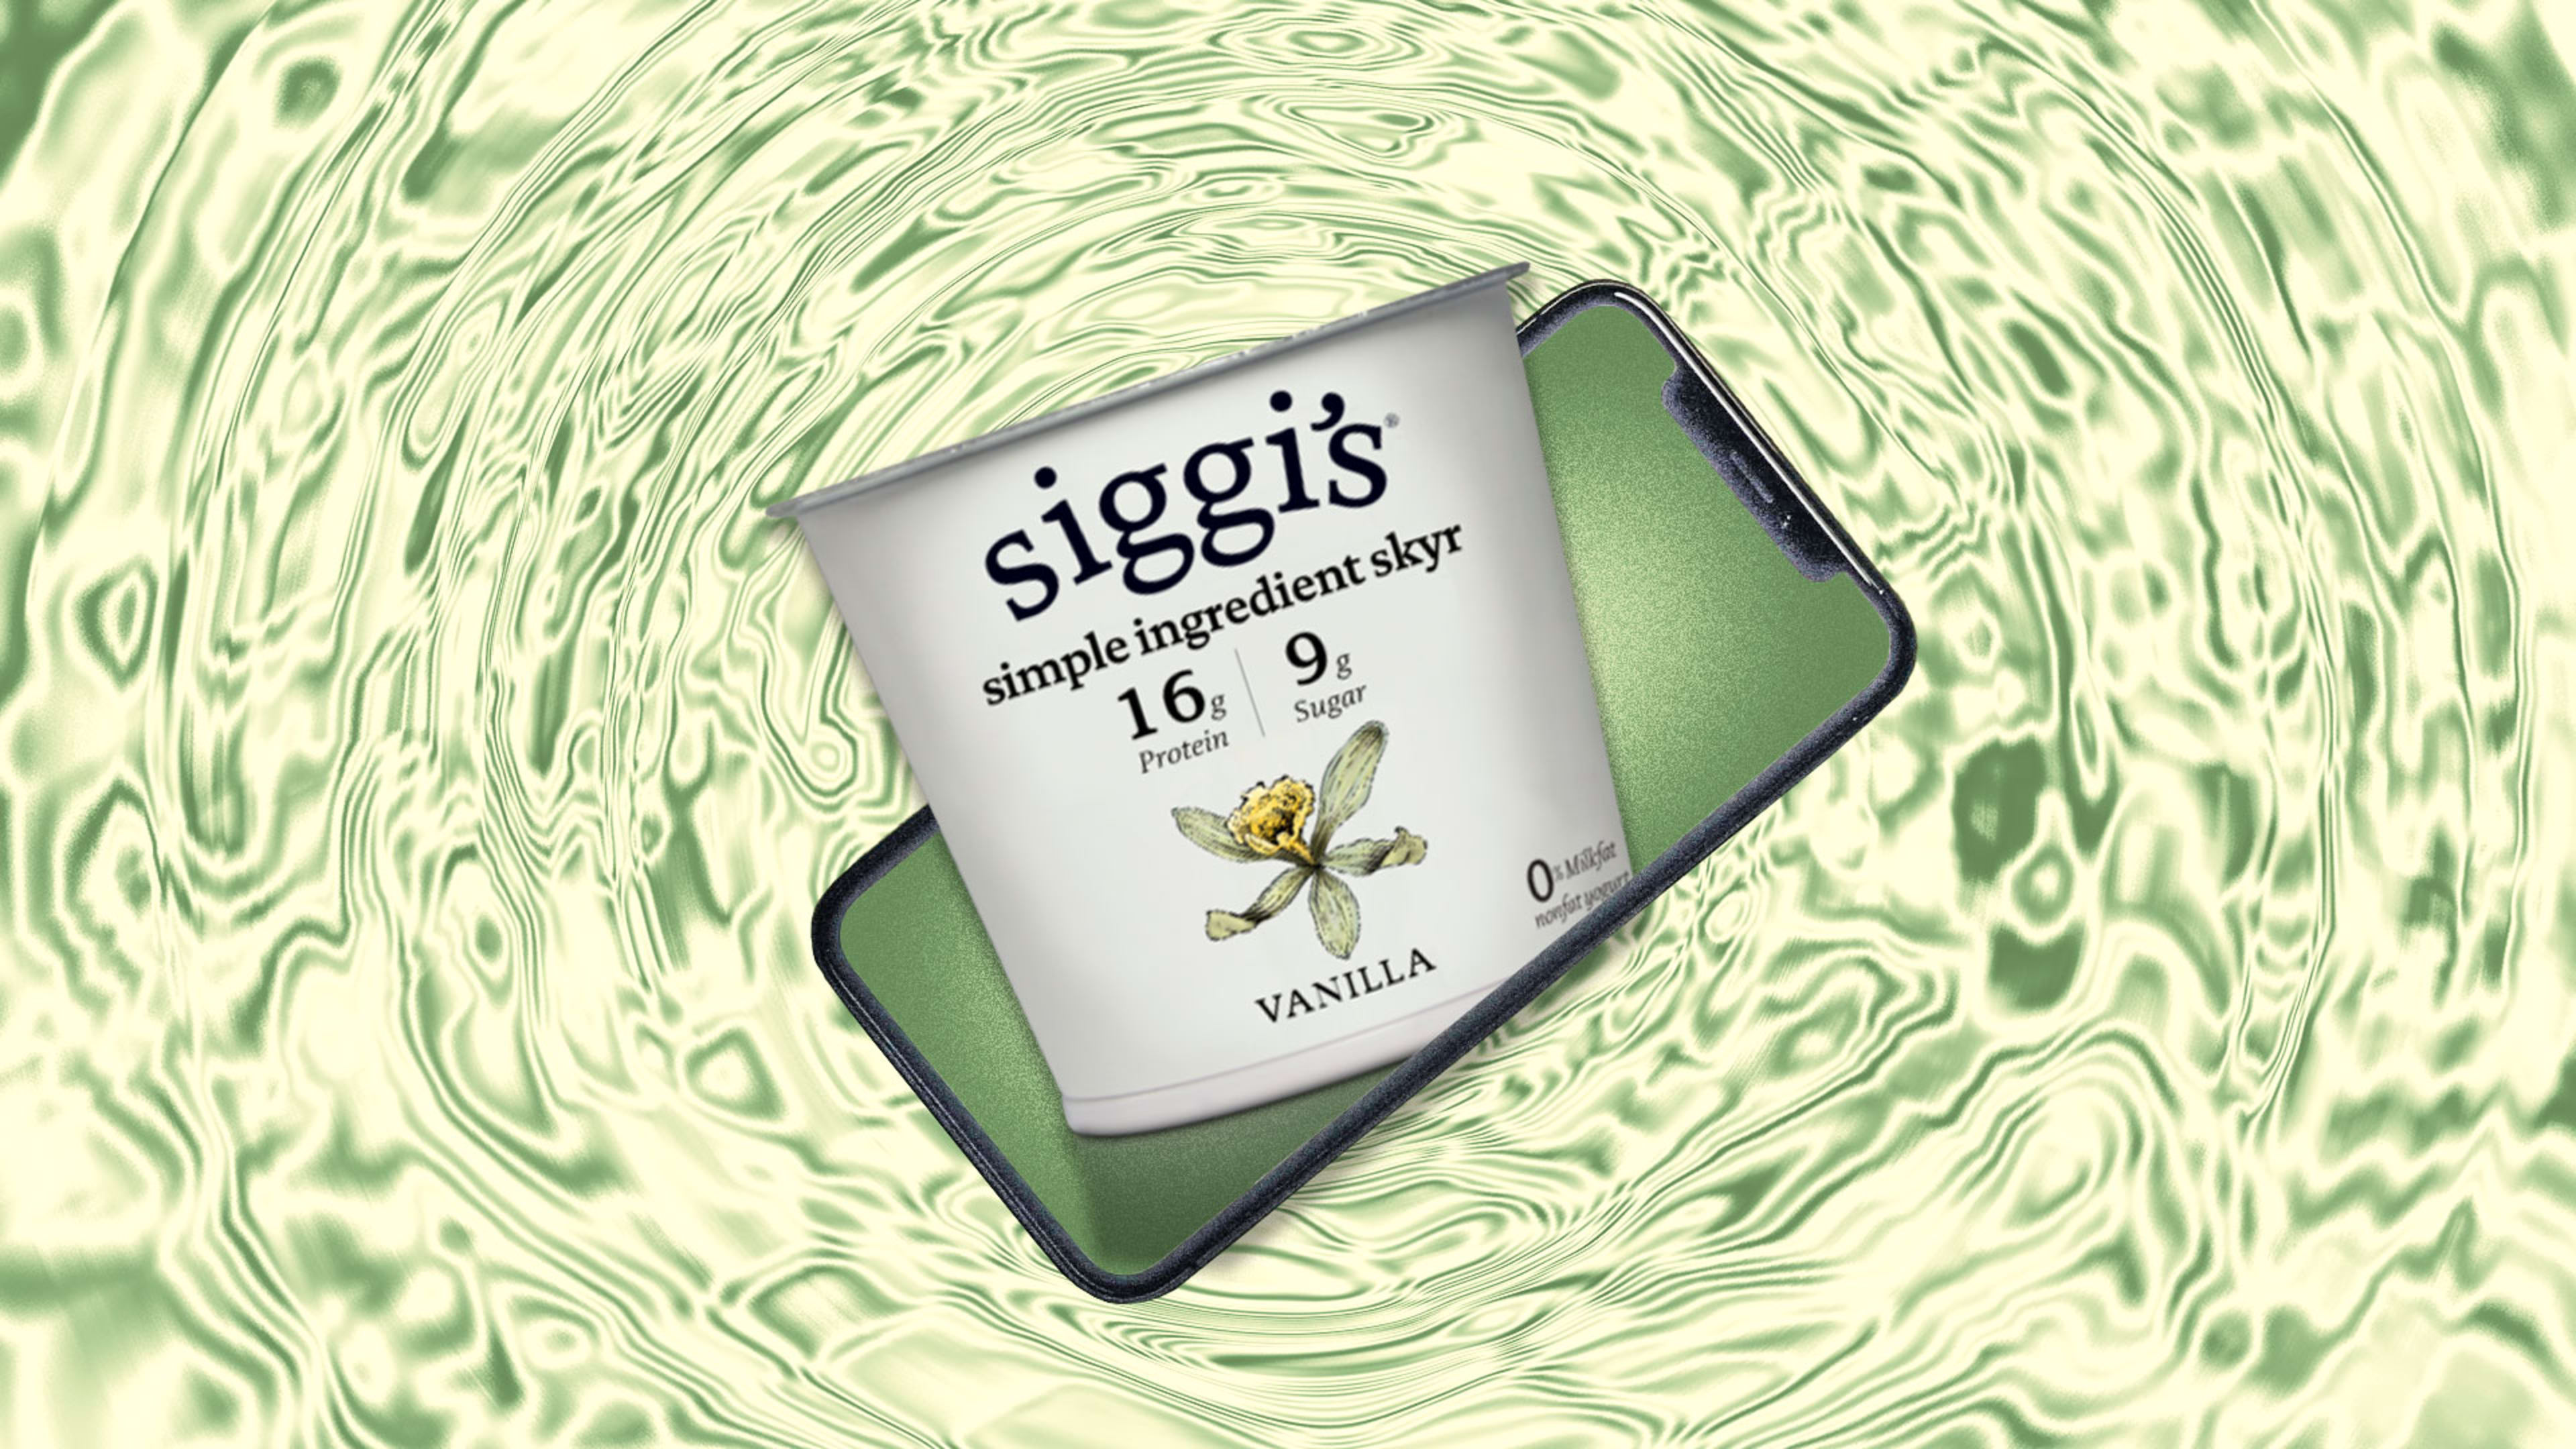 Siggi’s yogurt may give you $10,000 if you can explain why you need a smartphone detox